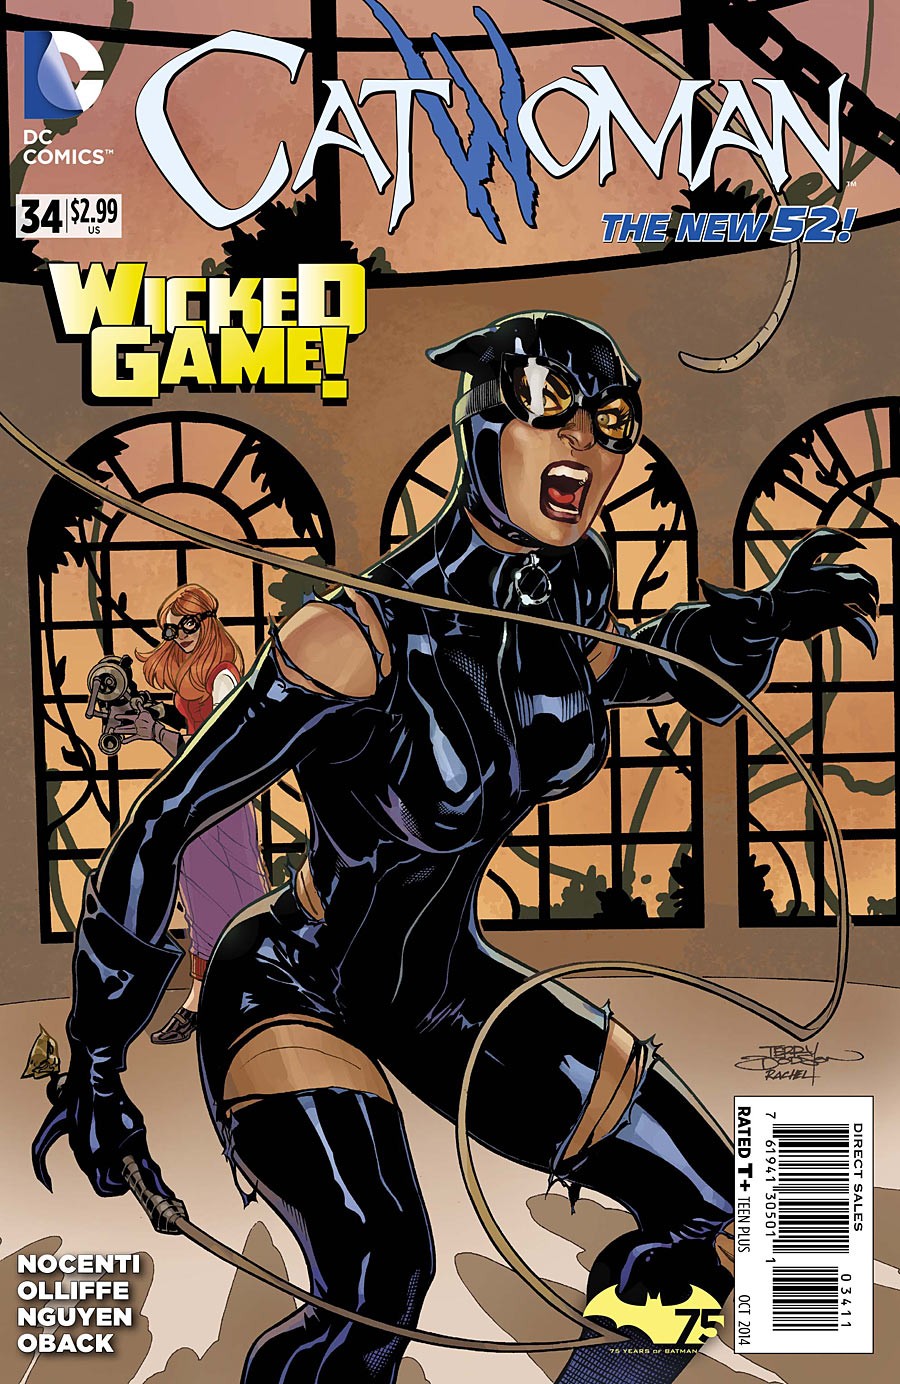 Catwoman Vol. 4 #34